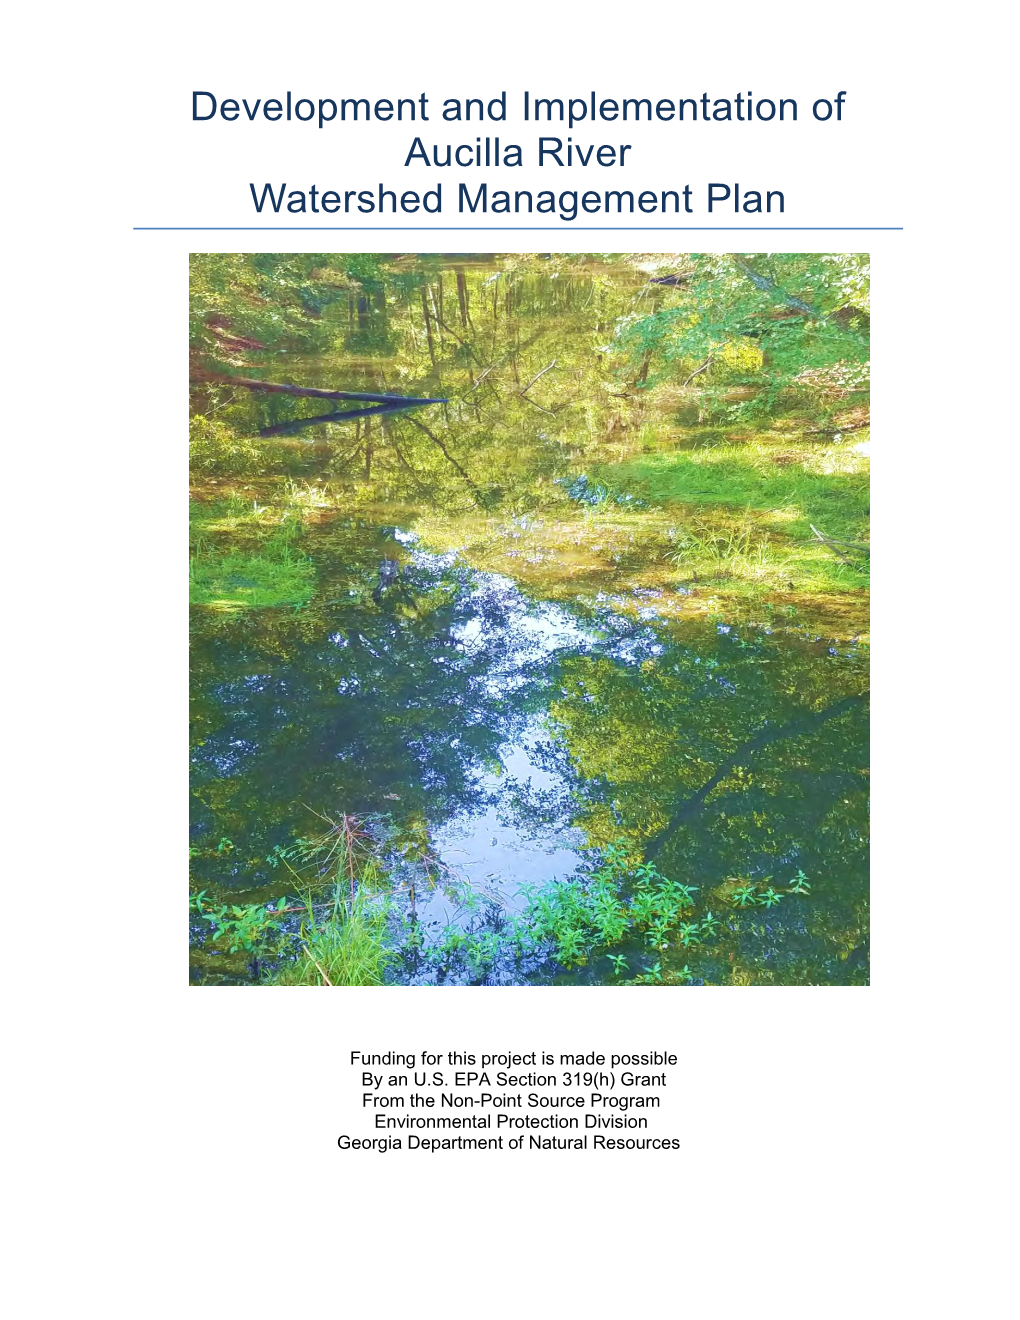 Aucilla River Watershed Management Plan